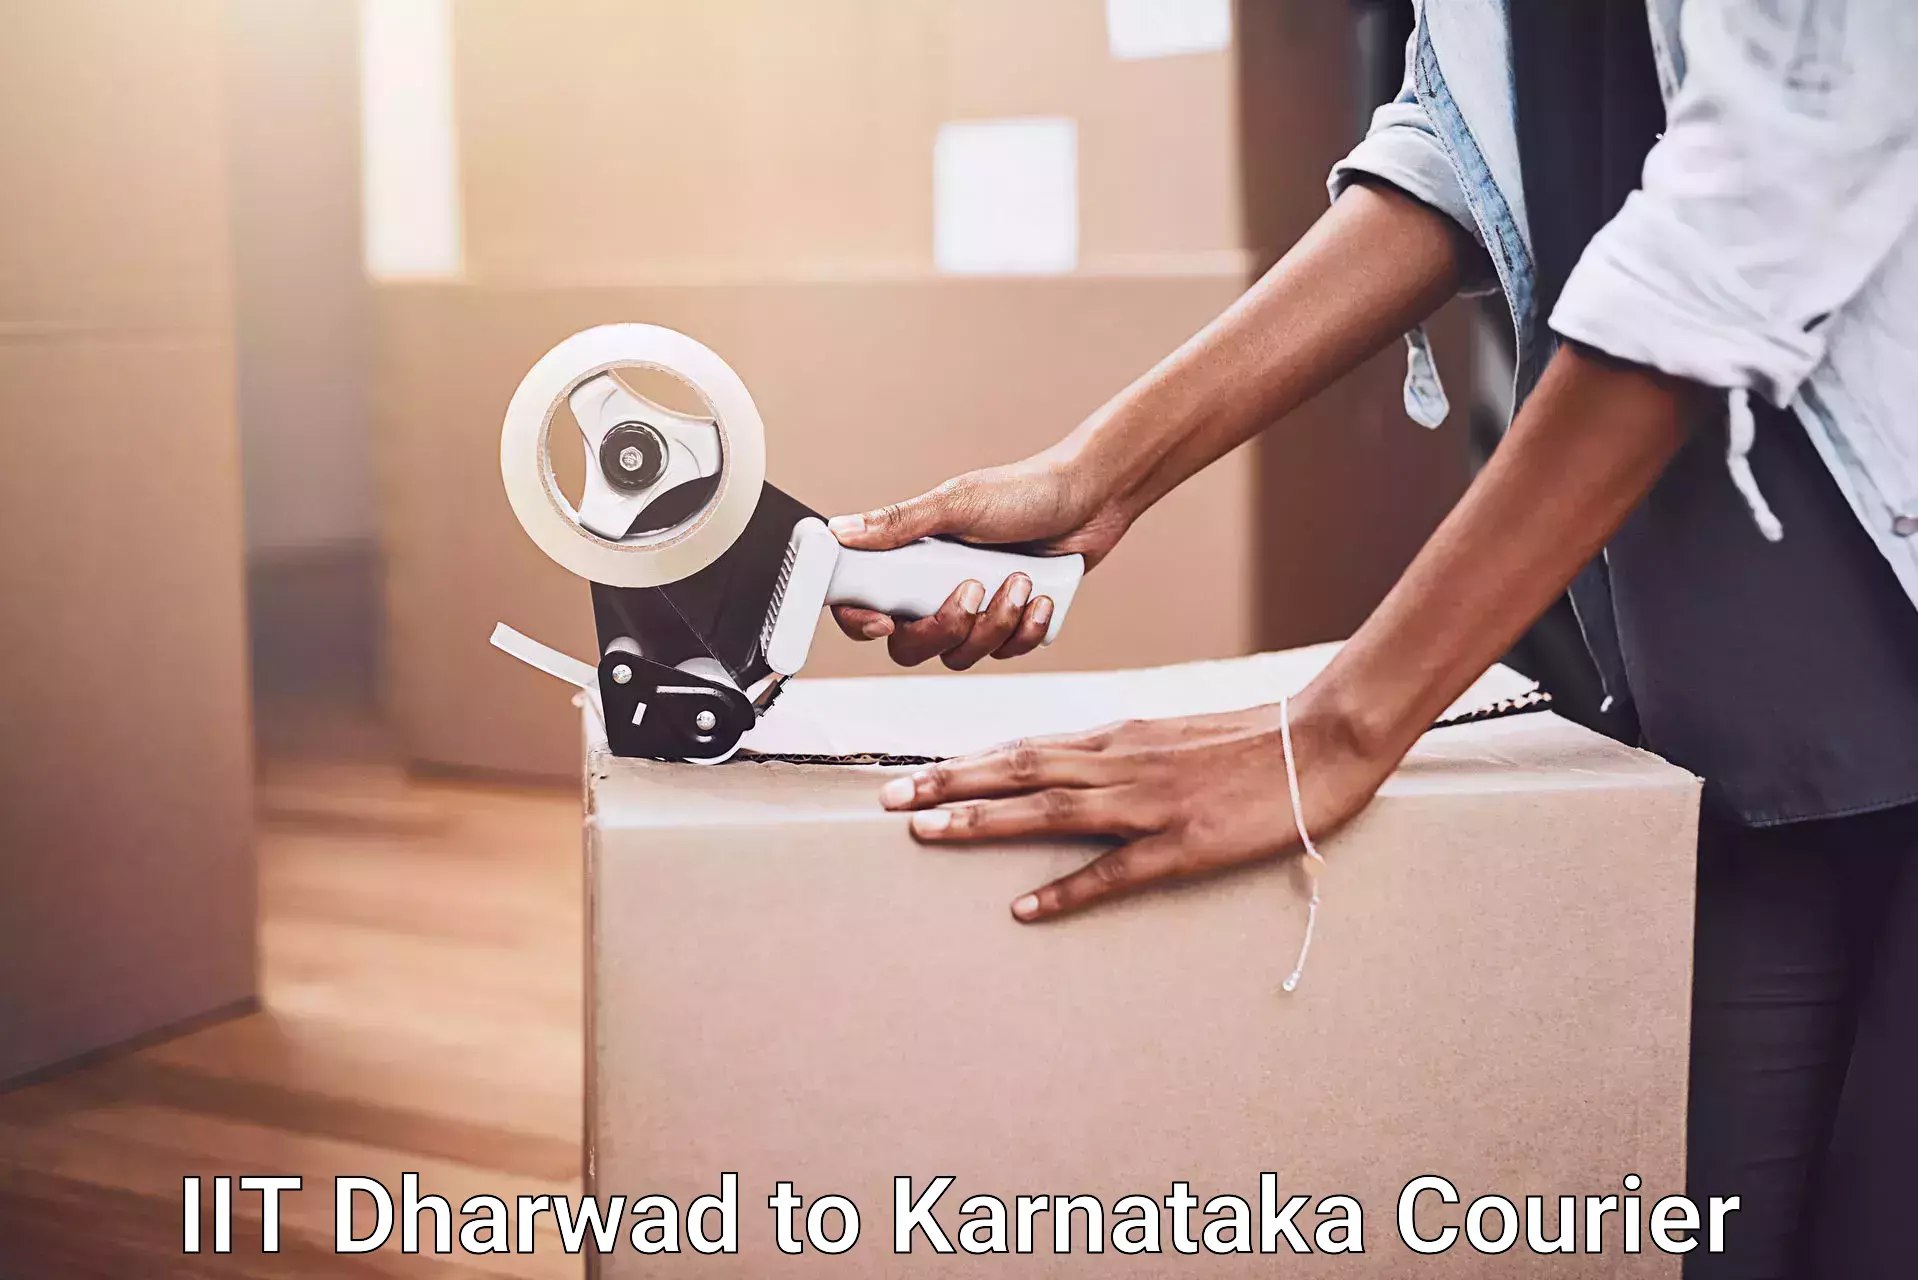 Furniture moving experts IIT Dharwad to Karnataka